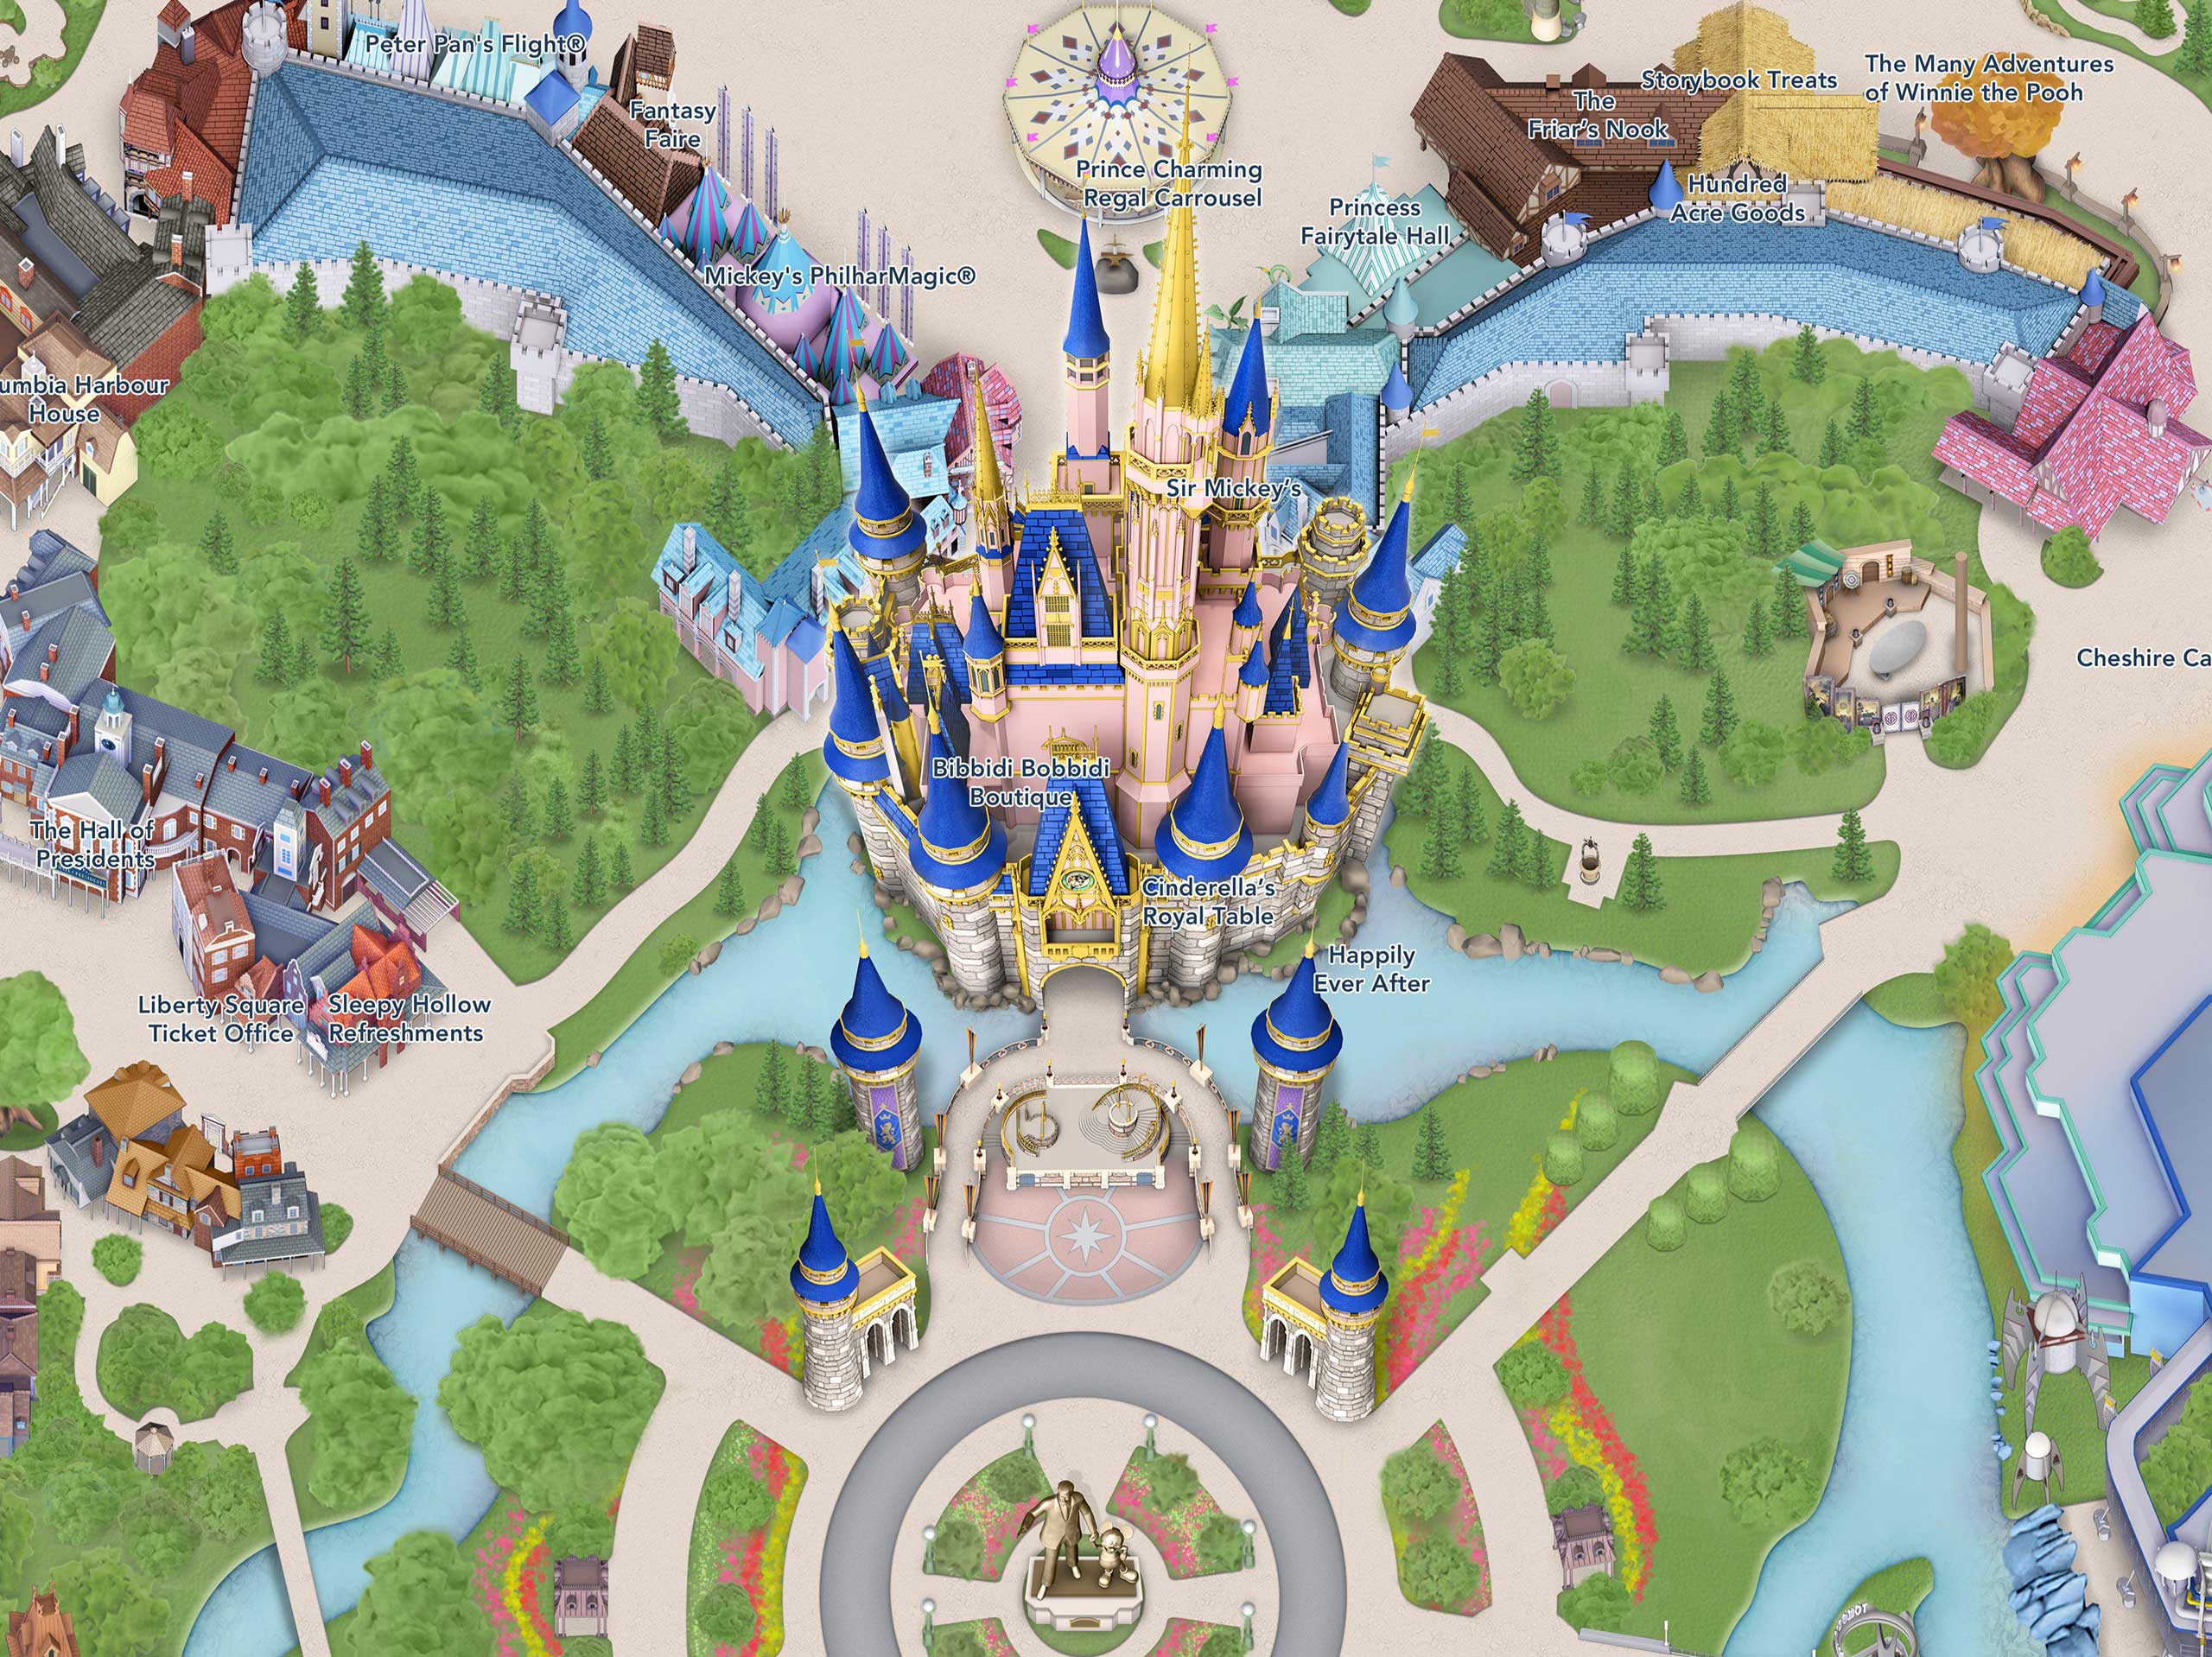 PHOTOS My Disney Experience digital map update for Magic Kingdom